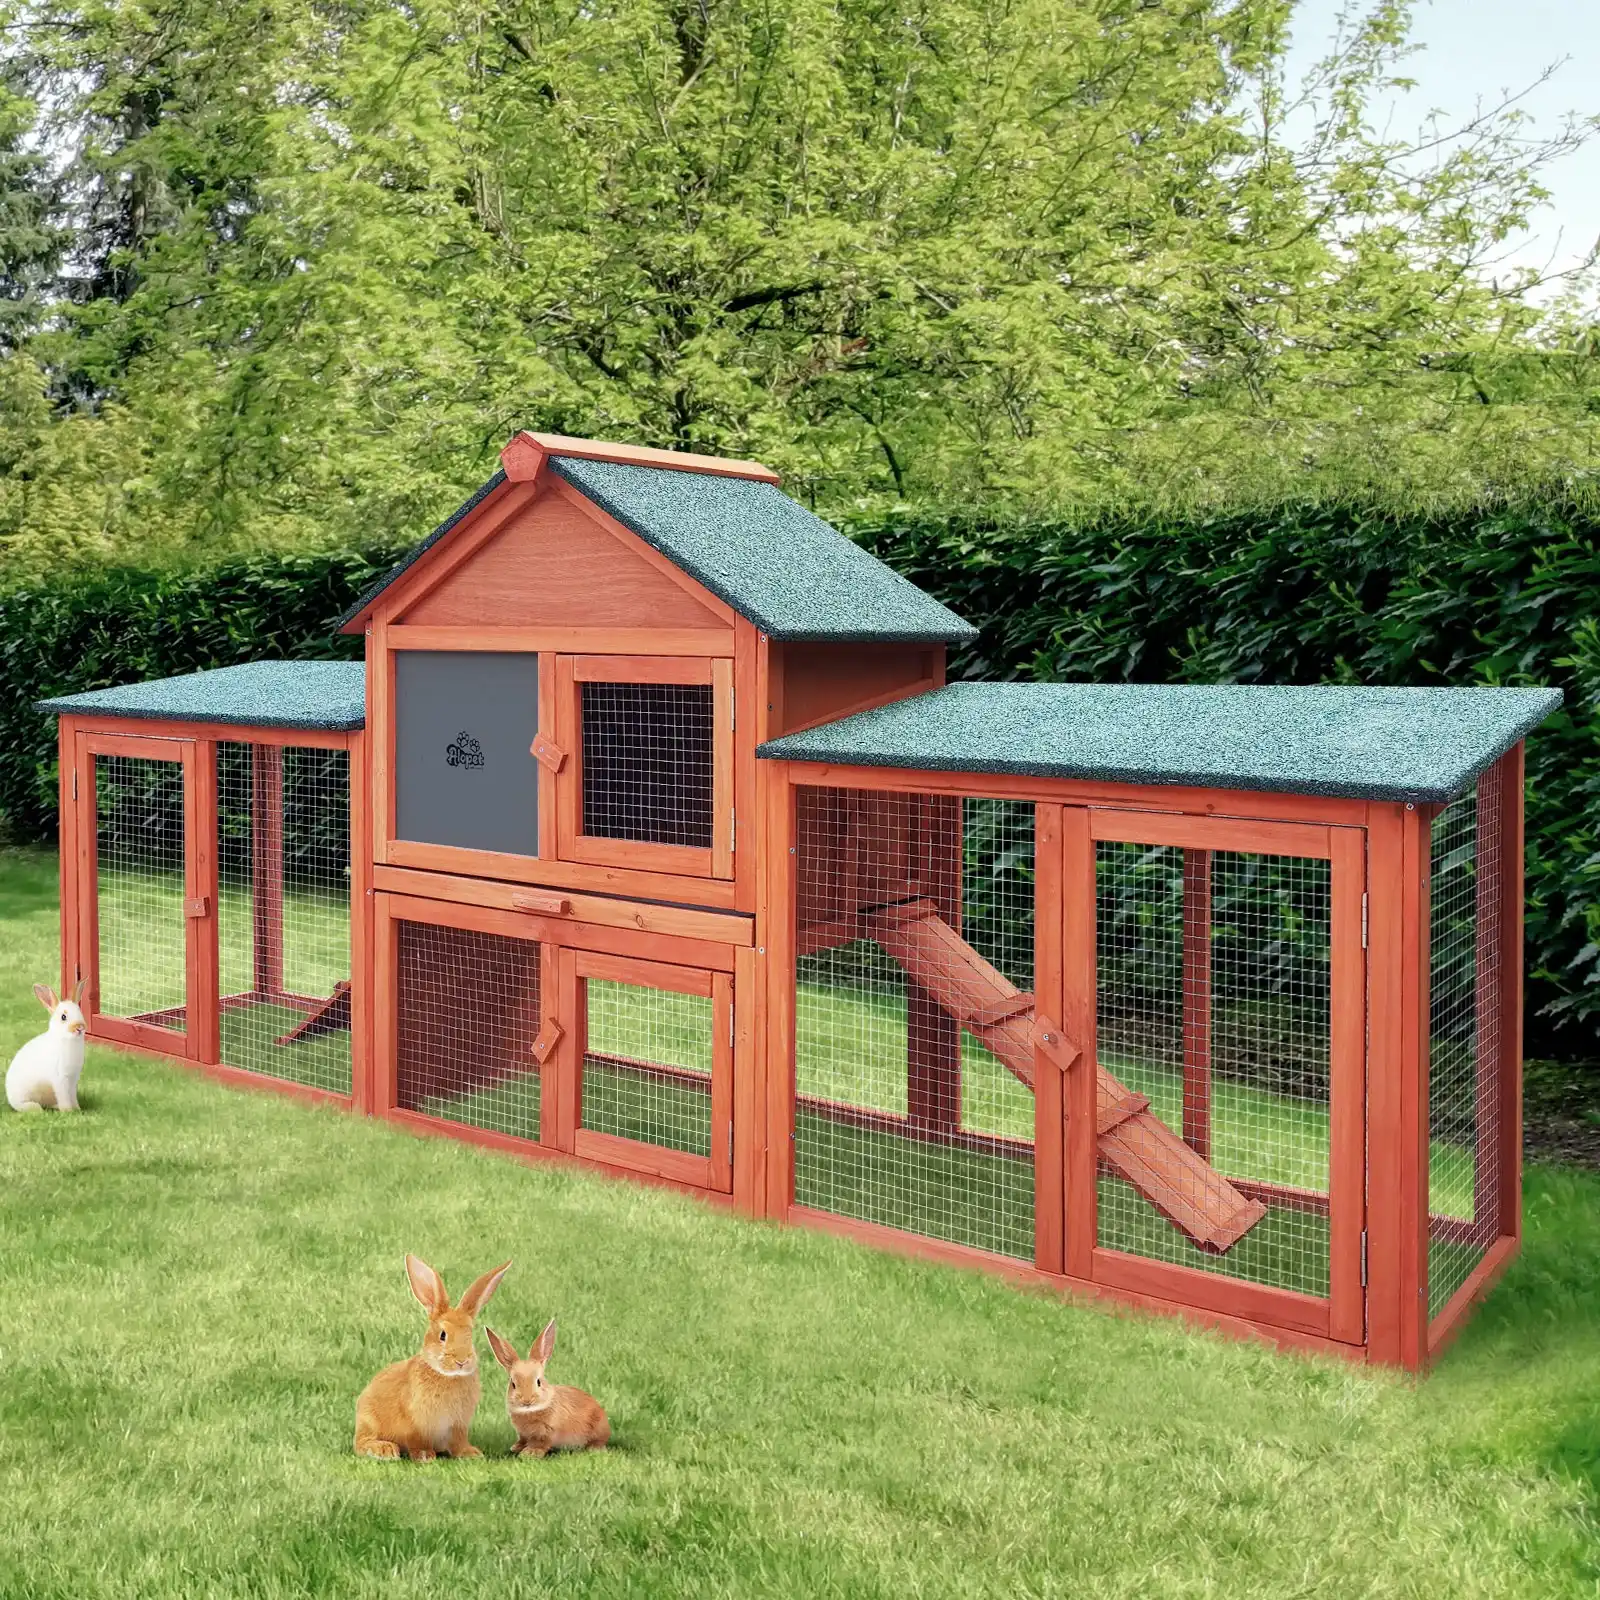 Alopet Rabbit Hutch Chicken Coop Bunny House Run Cage Wooden Outdoor Pet Hutch 210CM